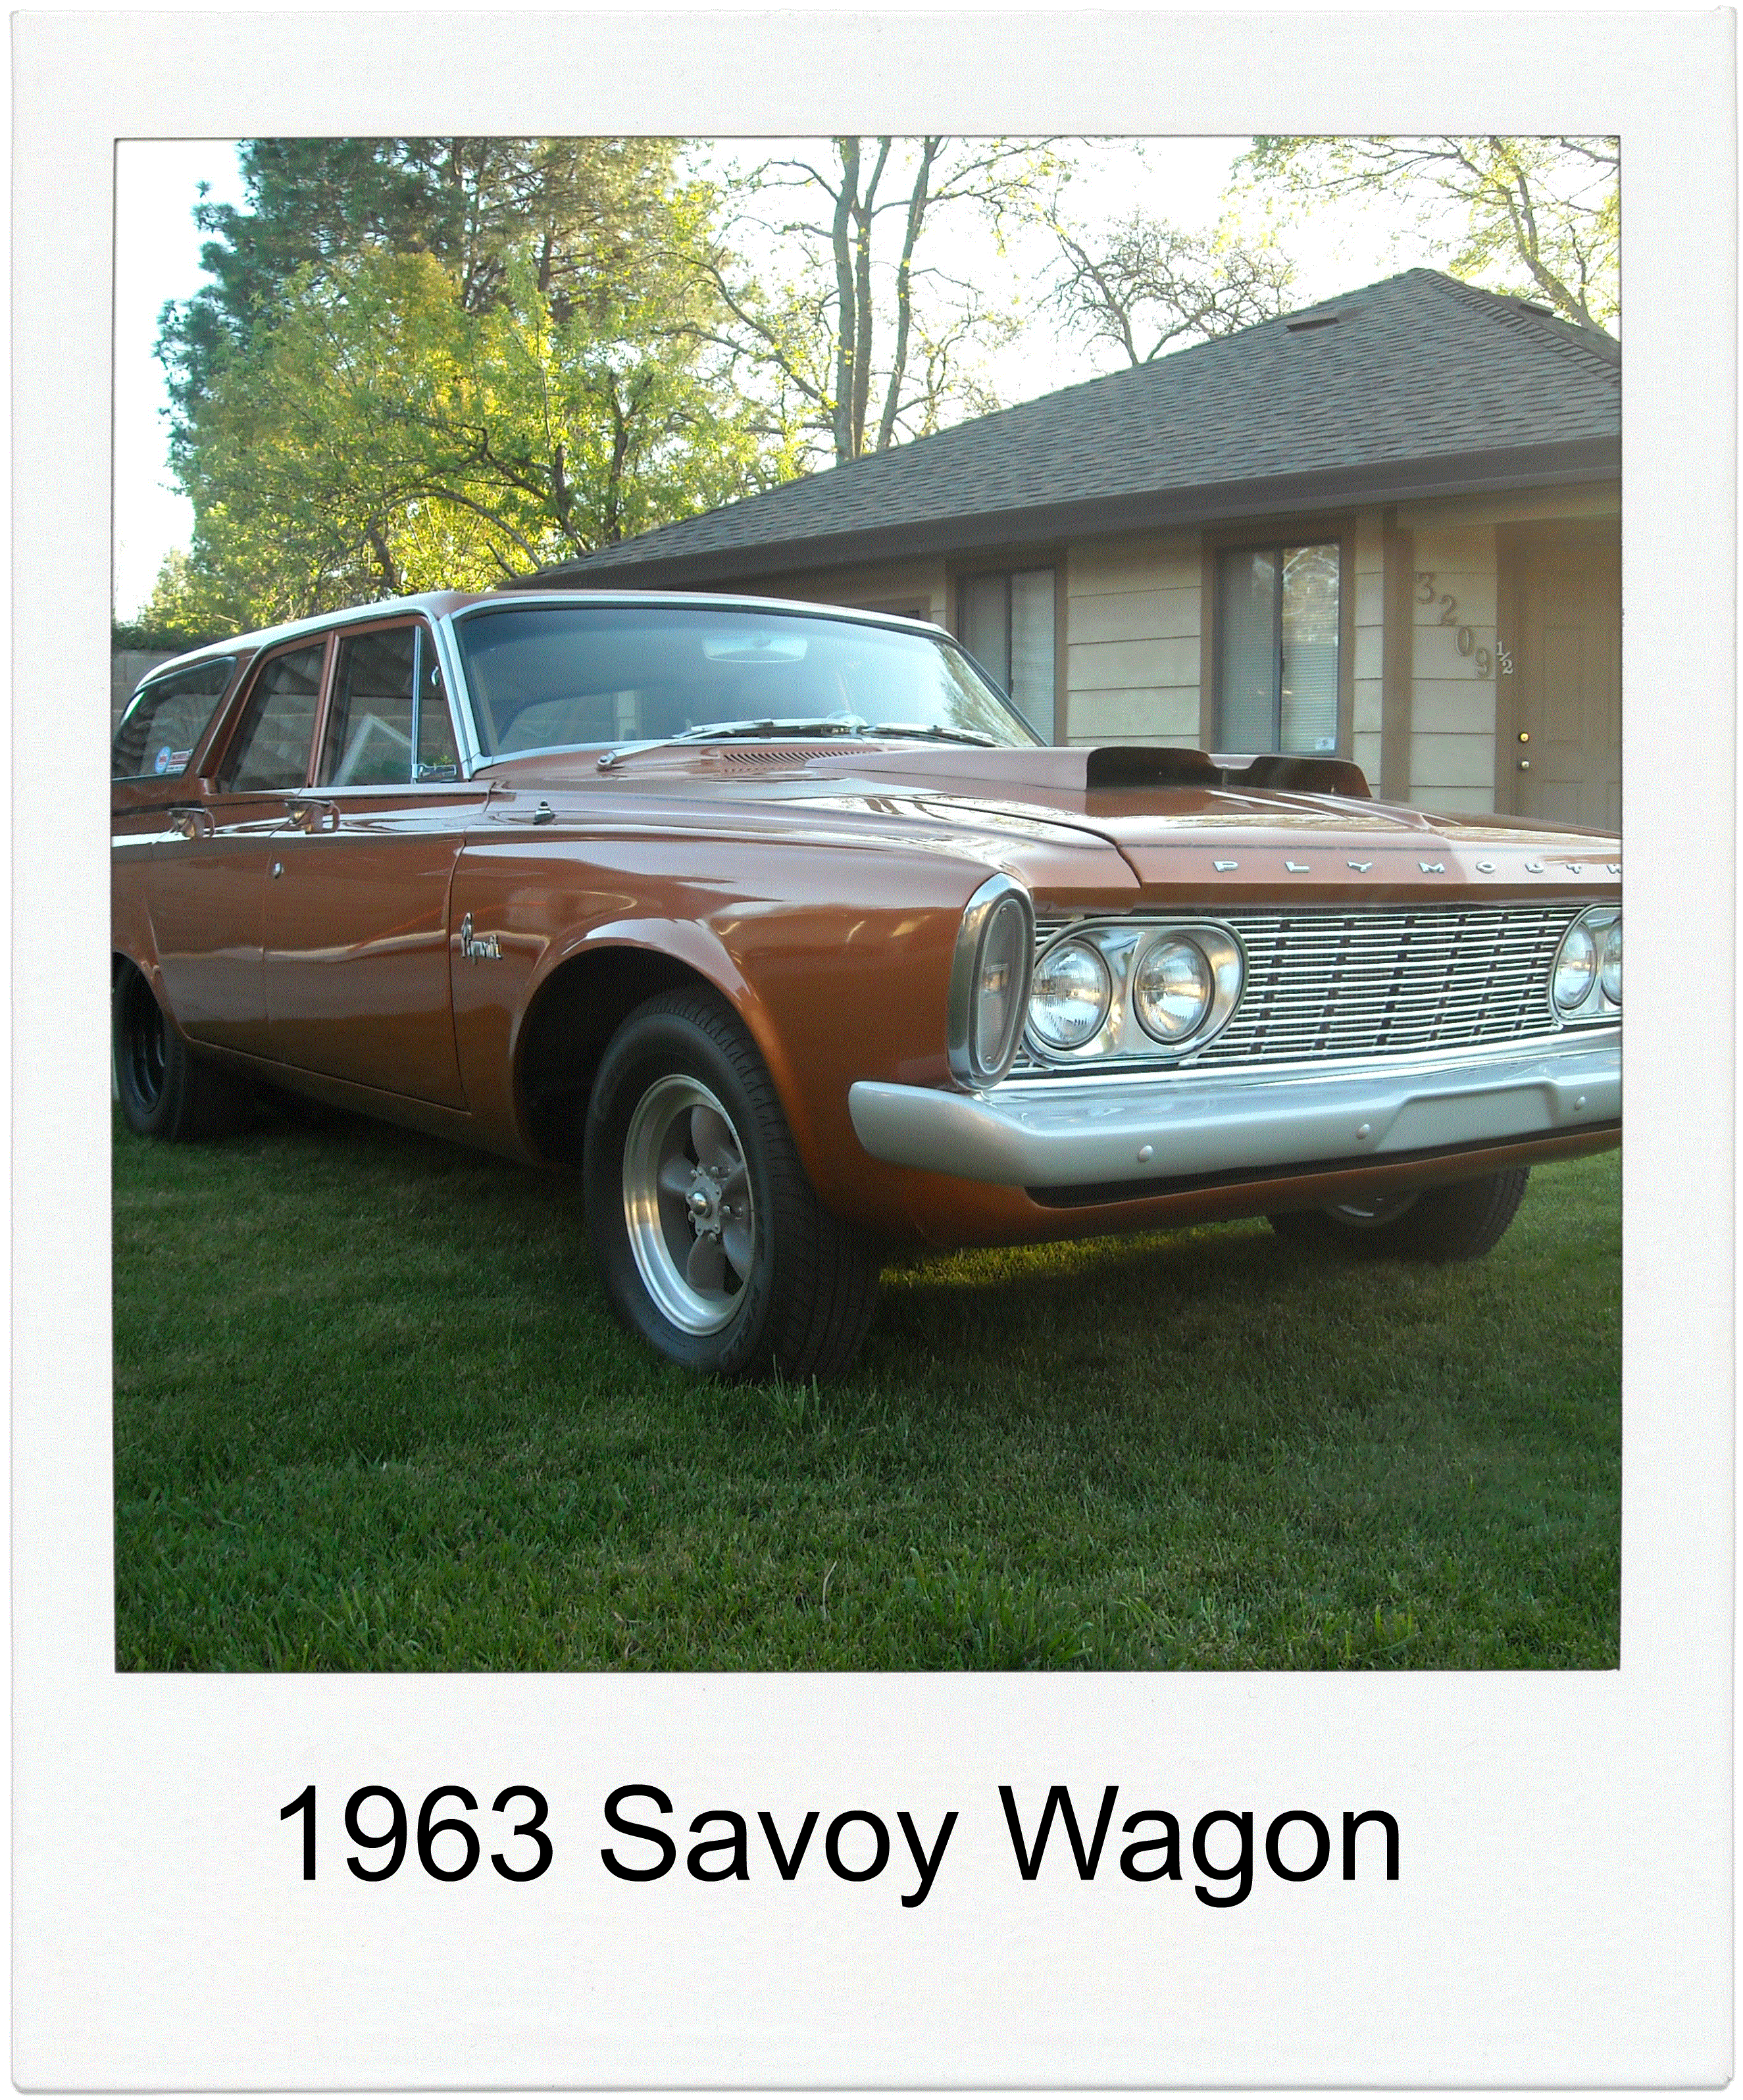 1963 Savoy Wagon